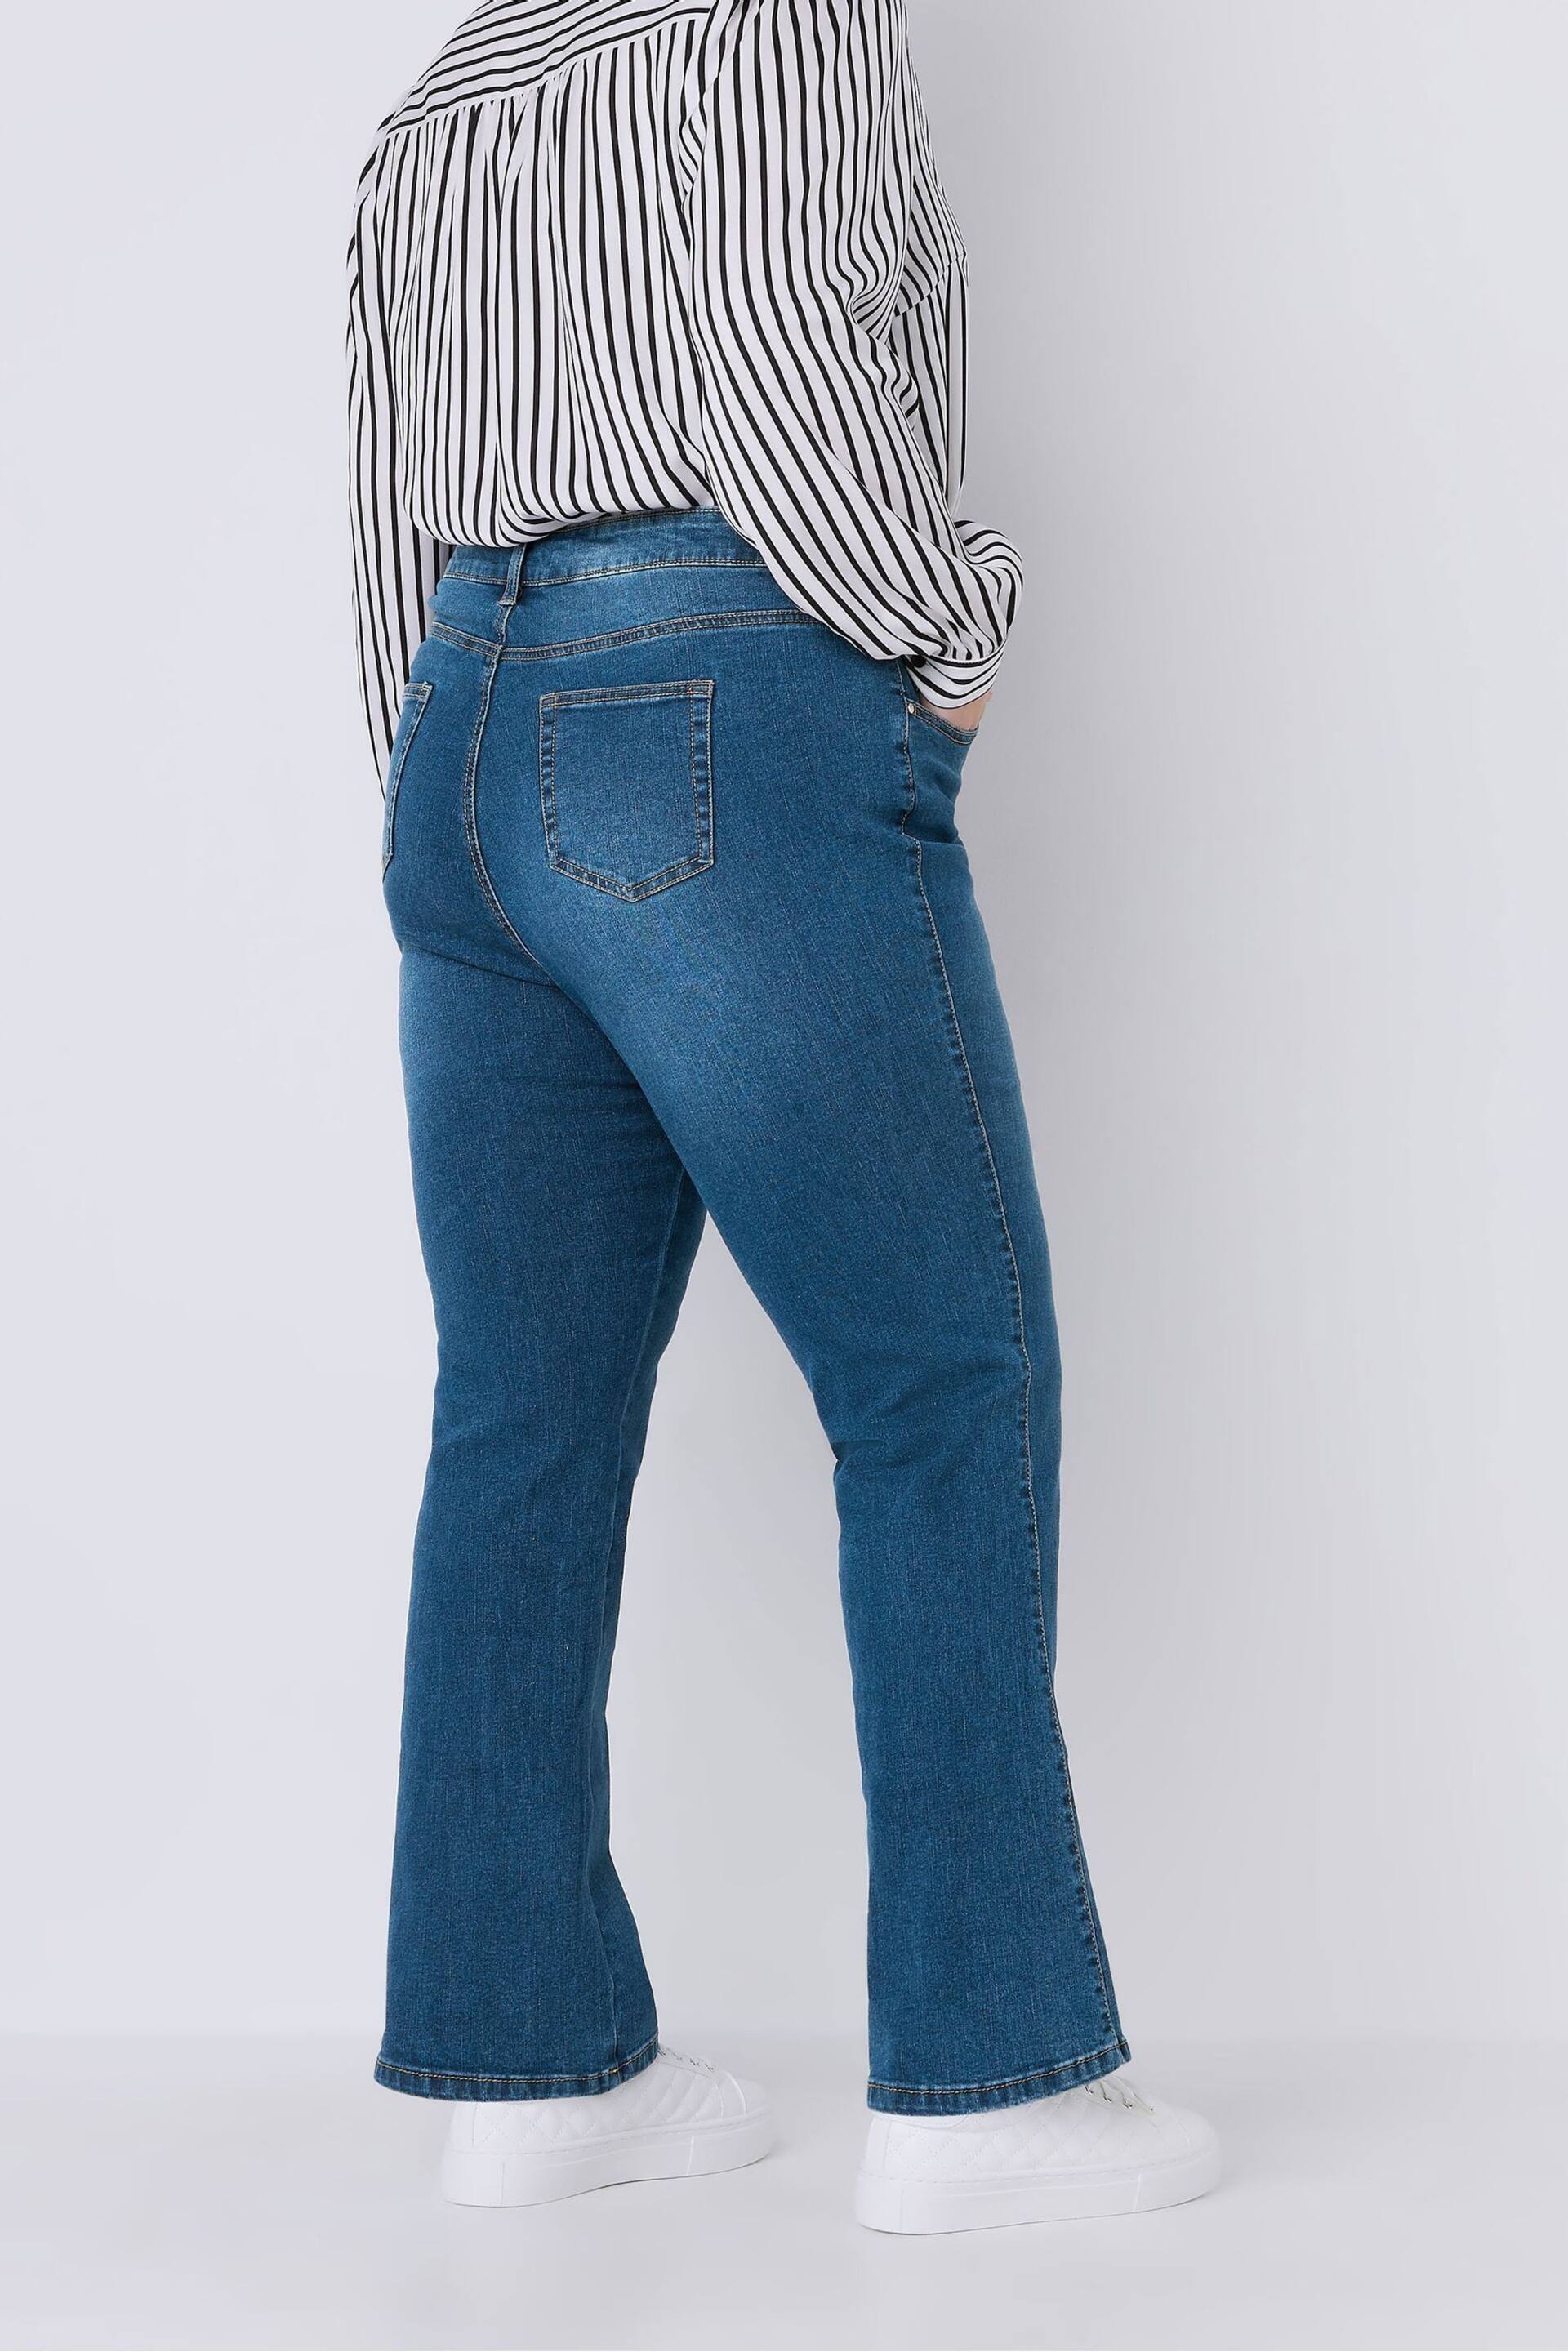 Evans Curve Fit Bootcut Blue Jeans - Image 2 of 4